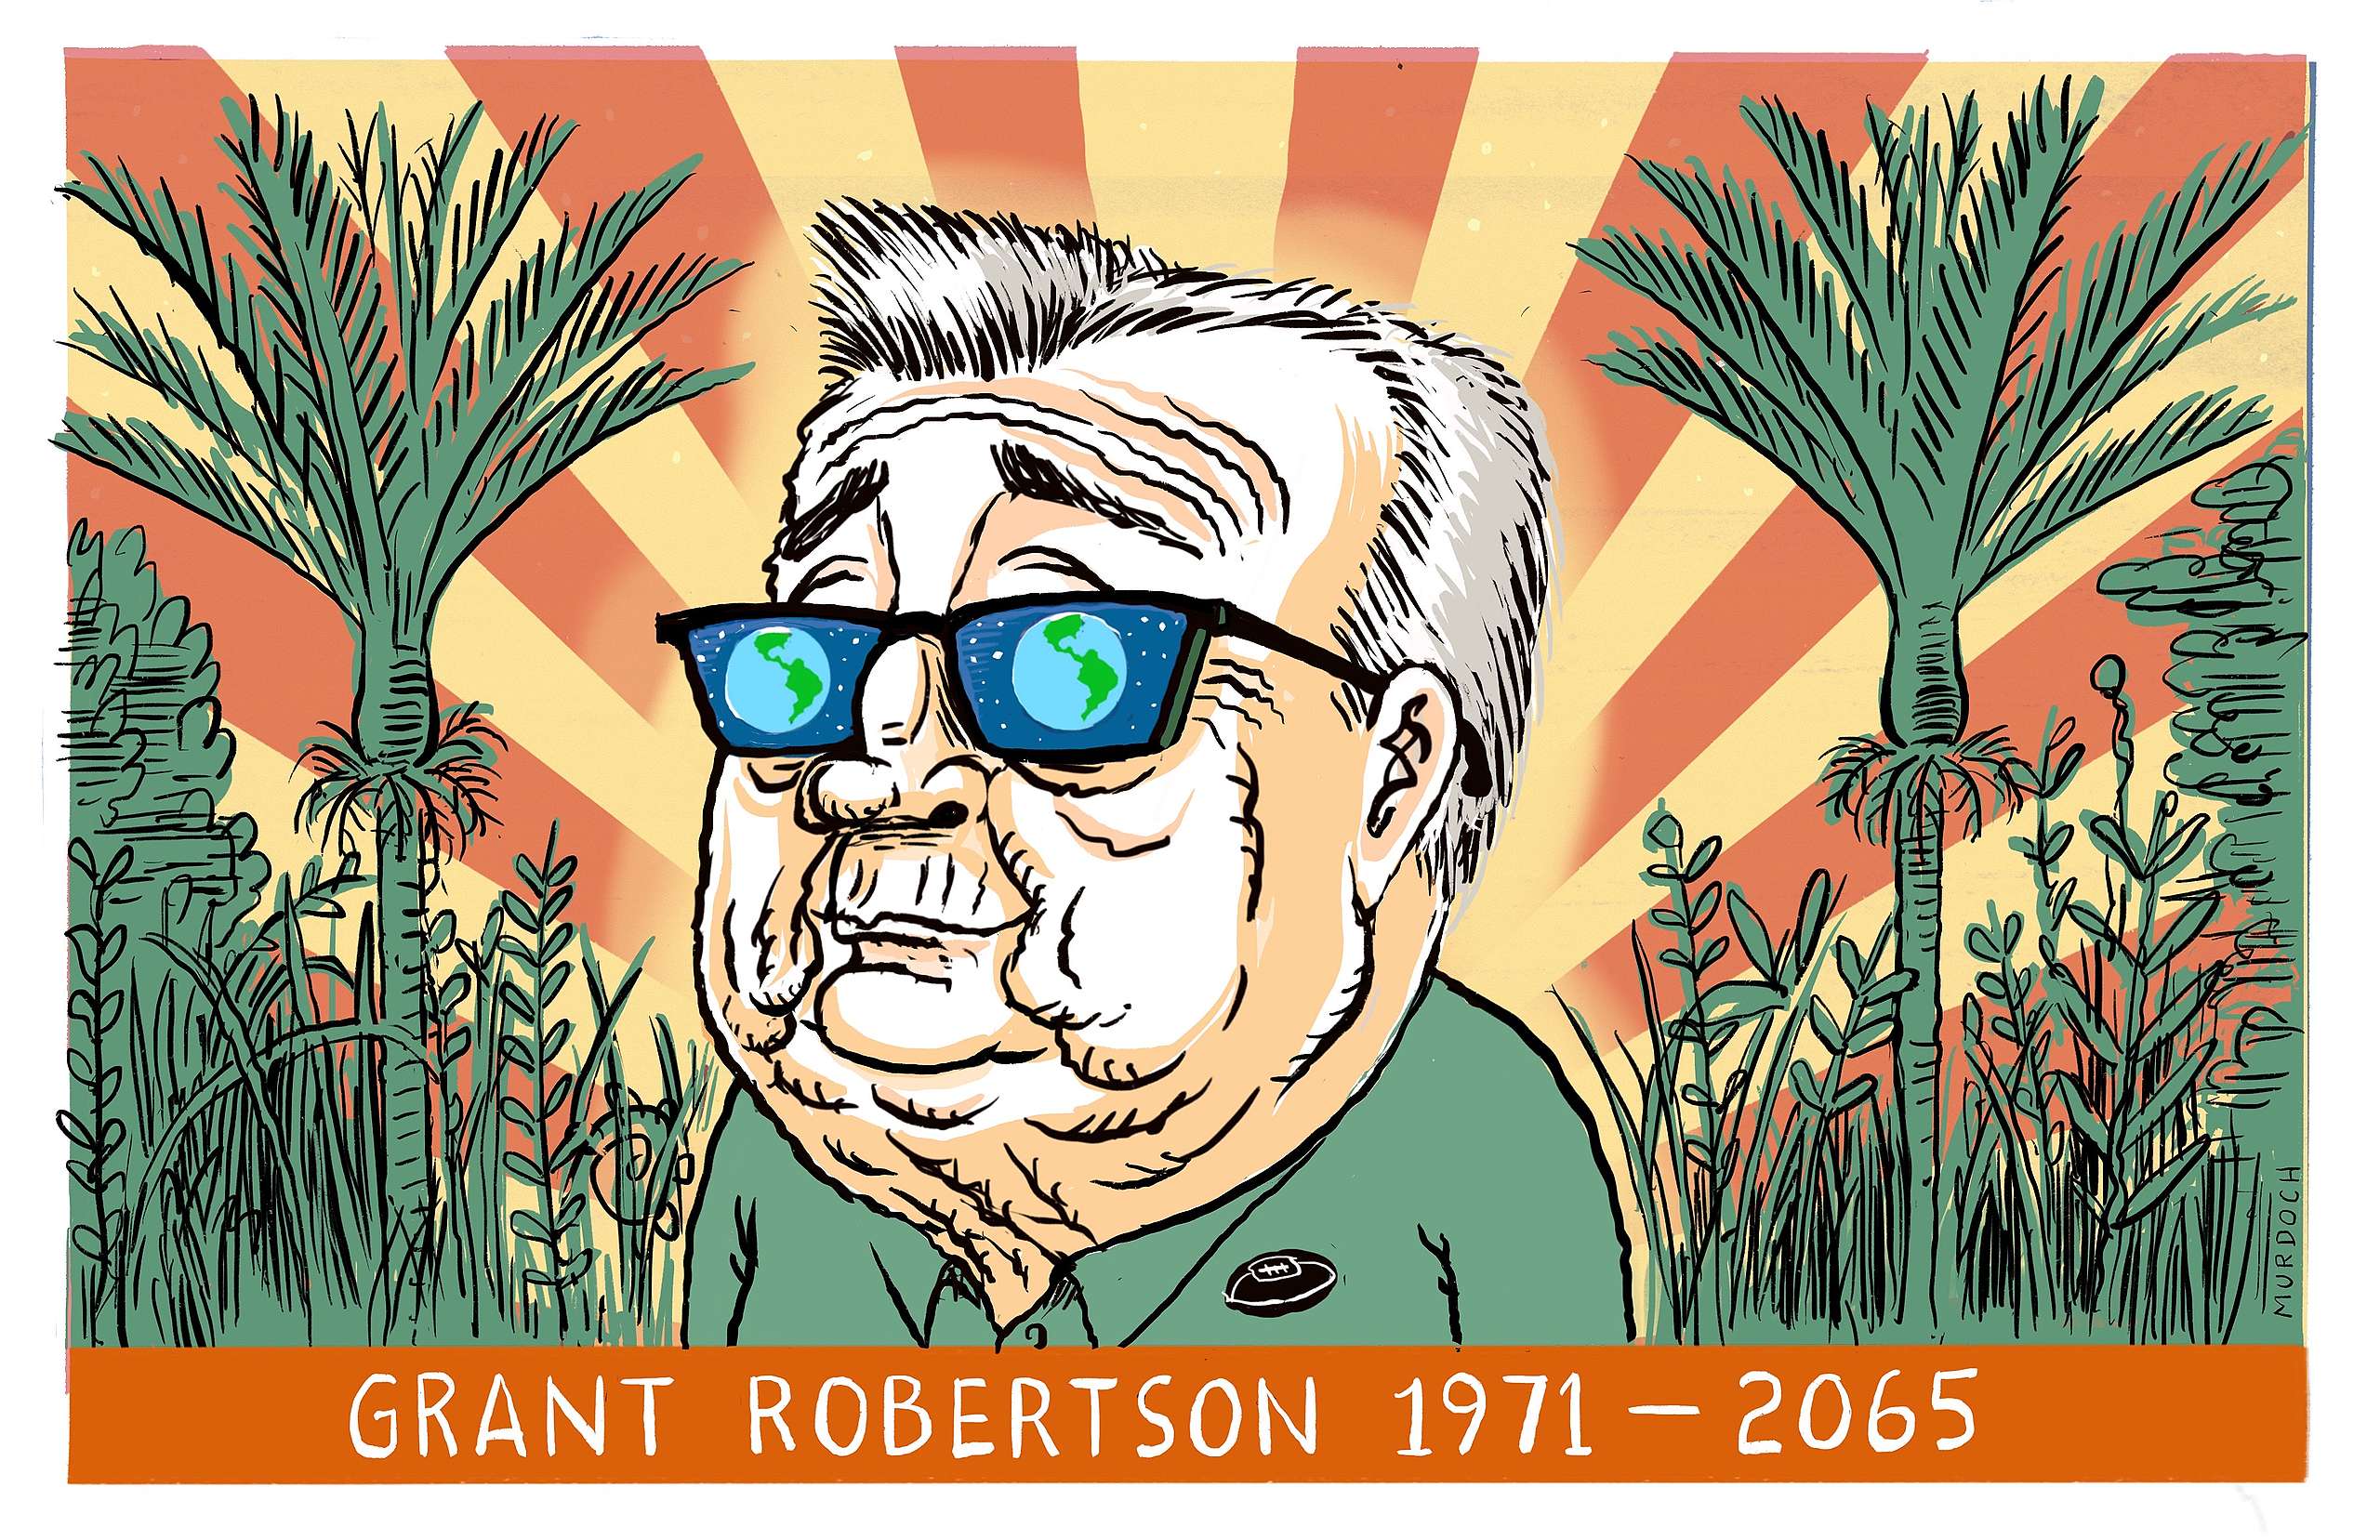 Grant Robertson 1971 - 2065 by Sharon Murdoch